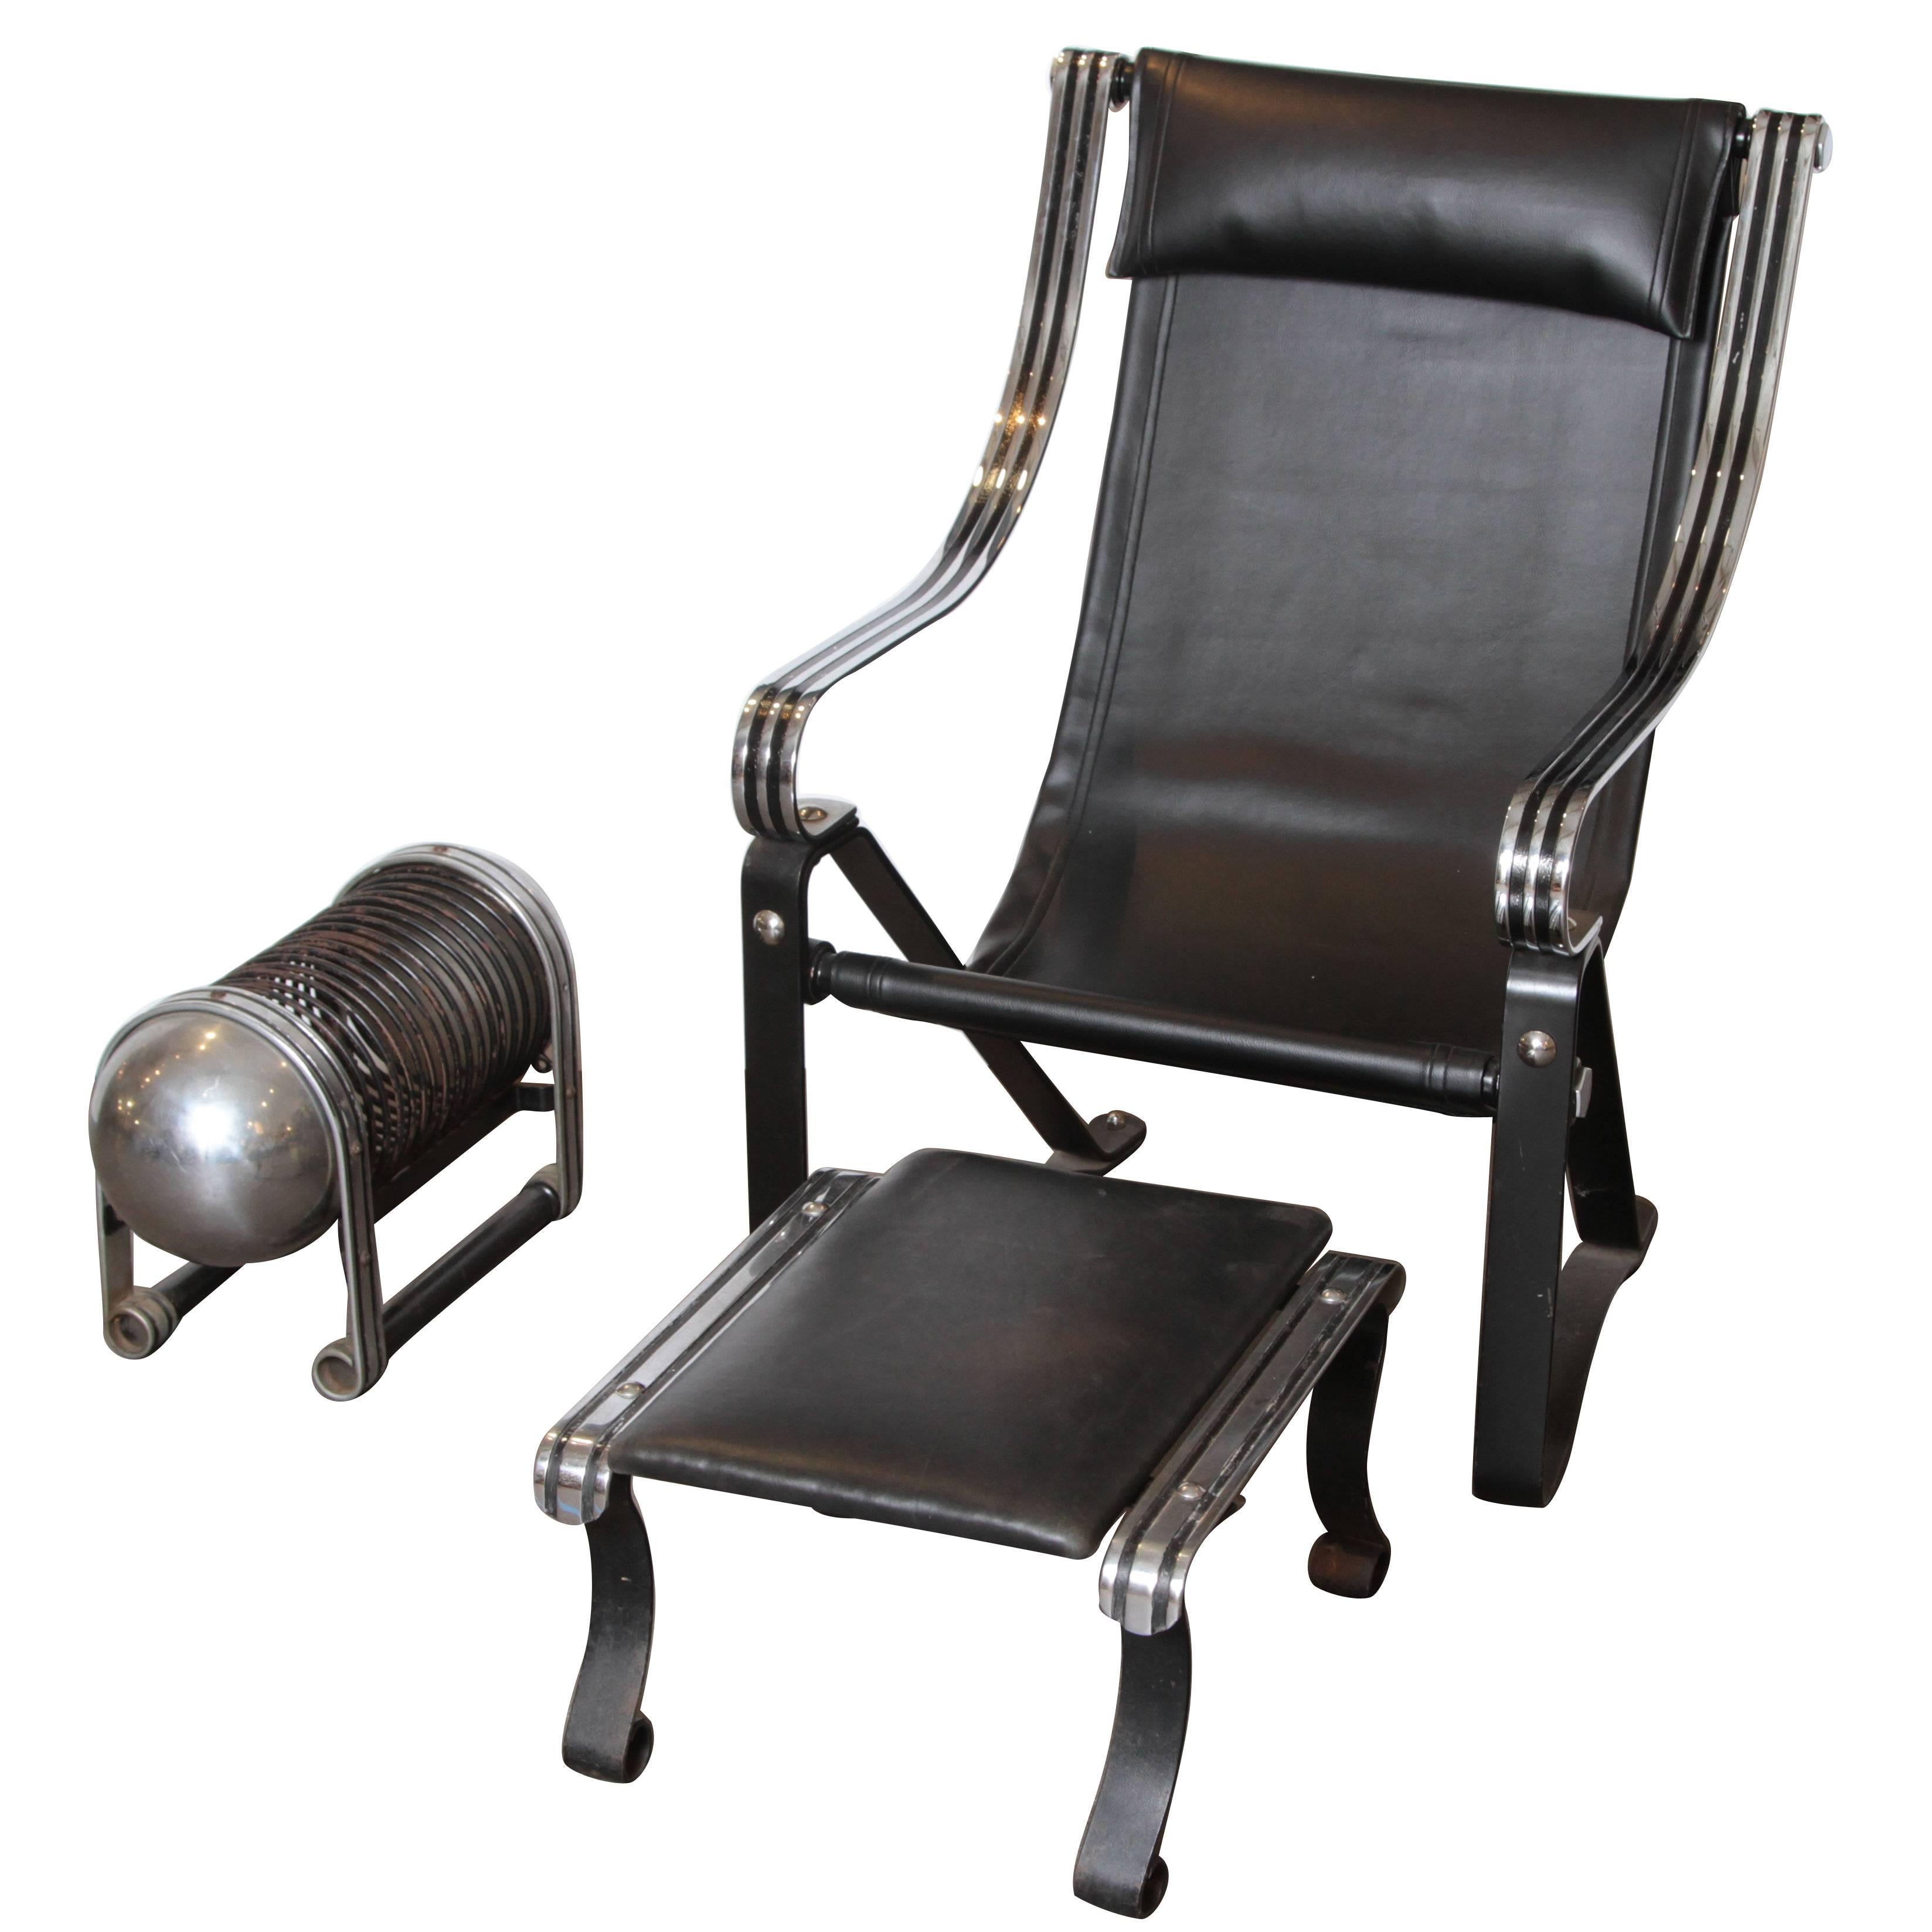 McKay Craft Machine Age Art Deco Lounge Suite: Chair/ Ottoman/ Magazine Rack For Sale